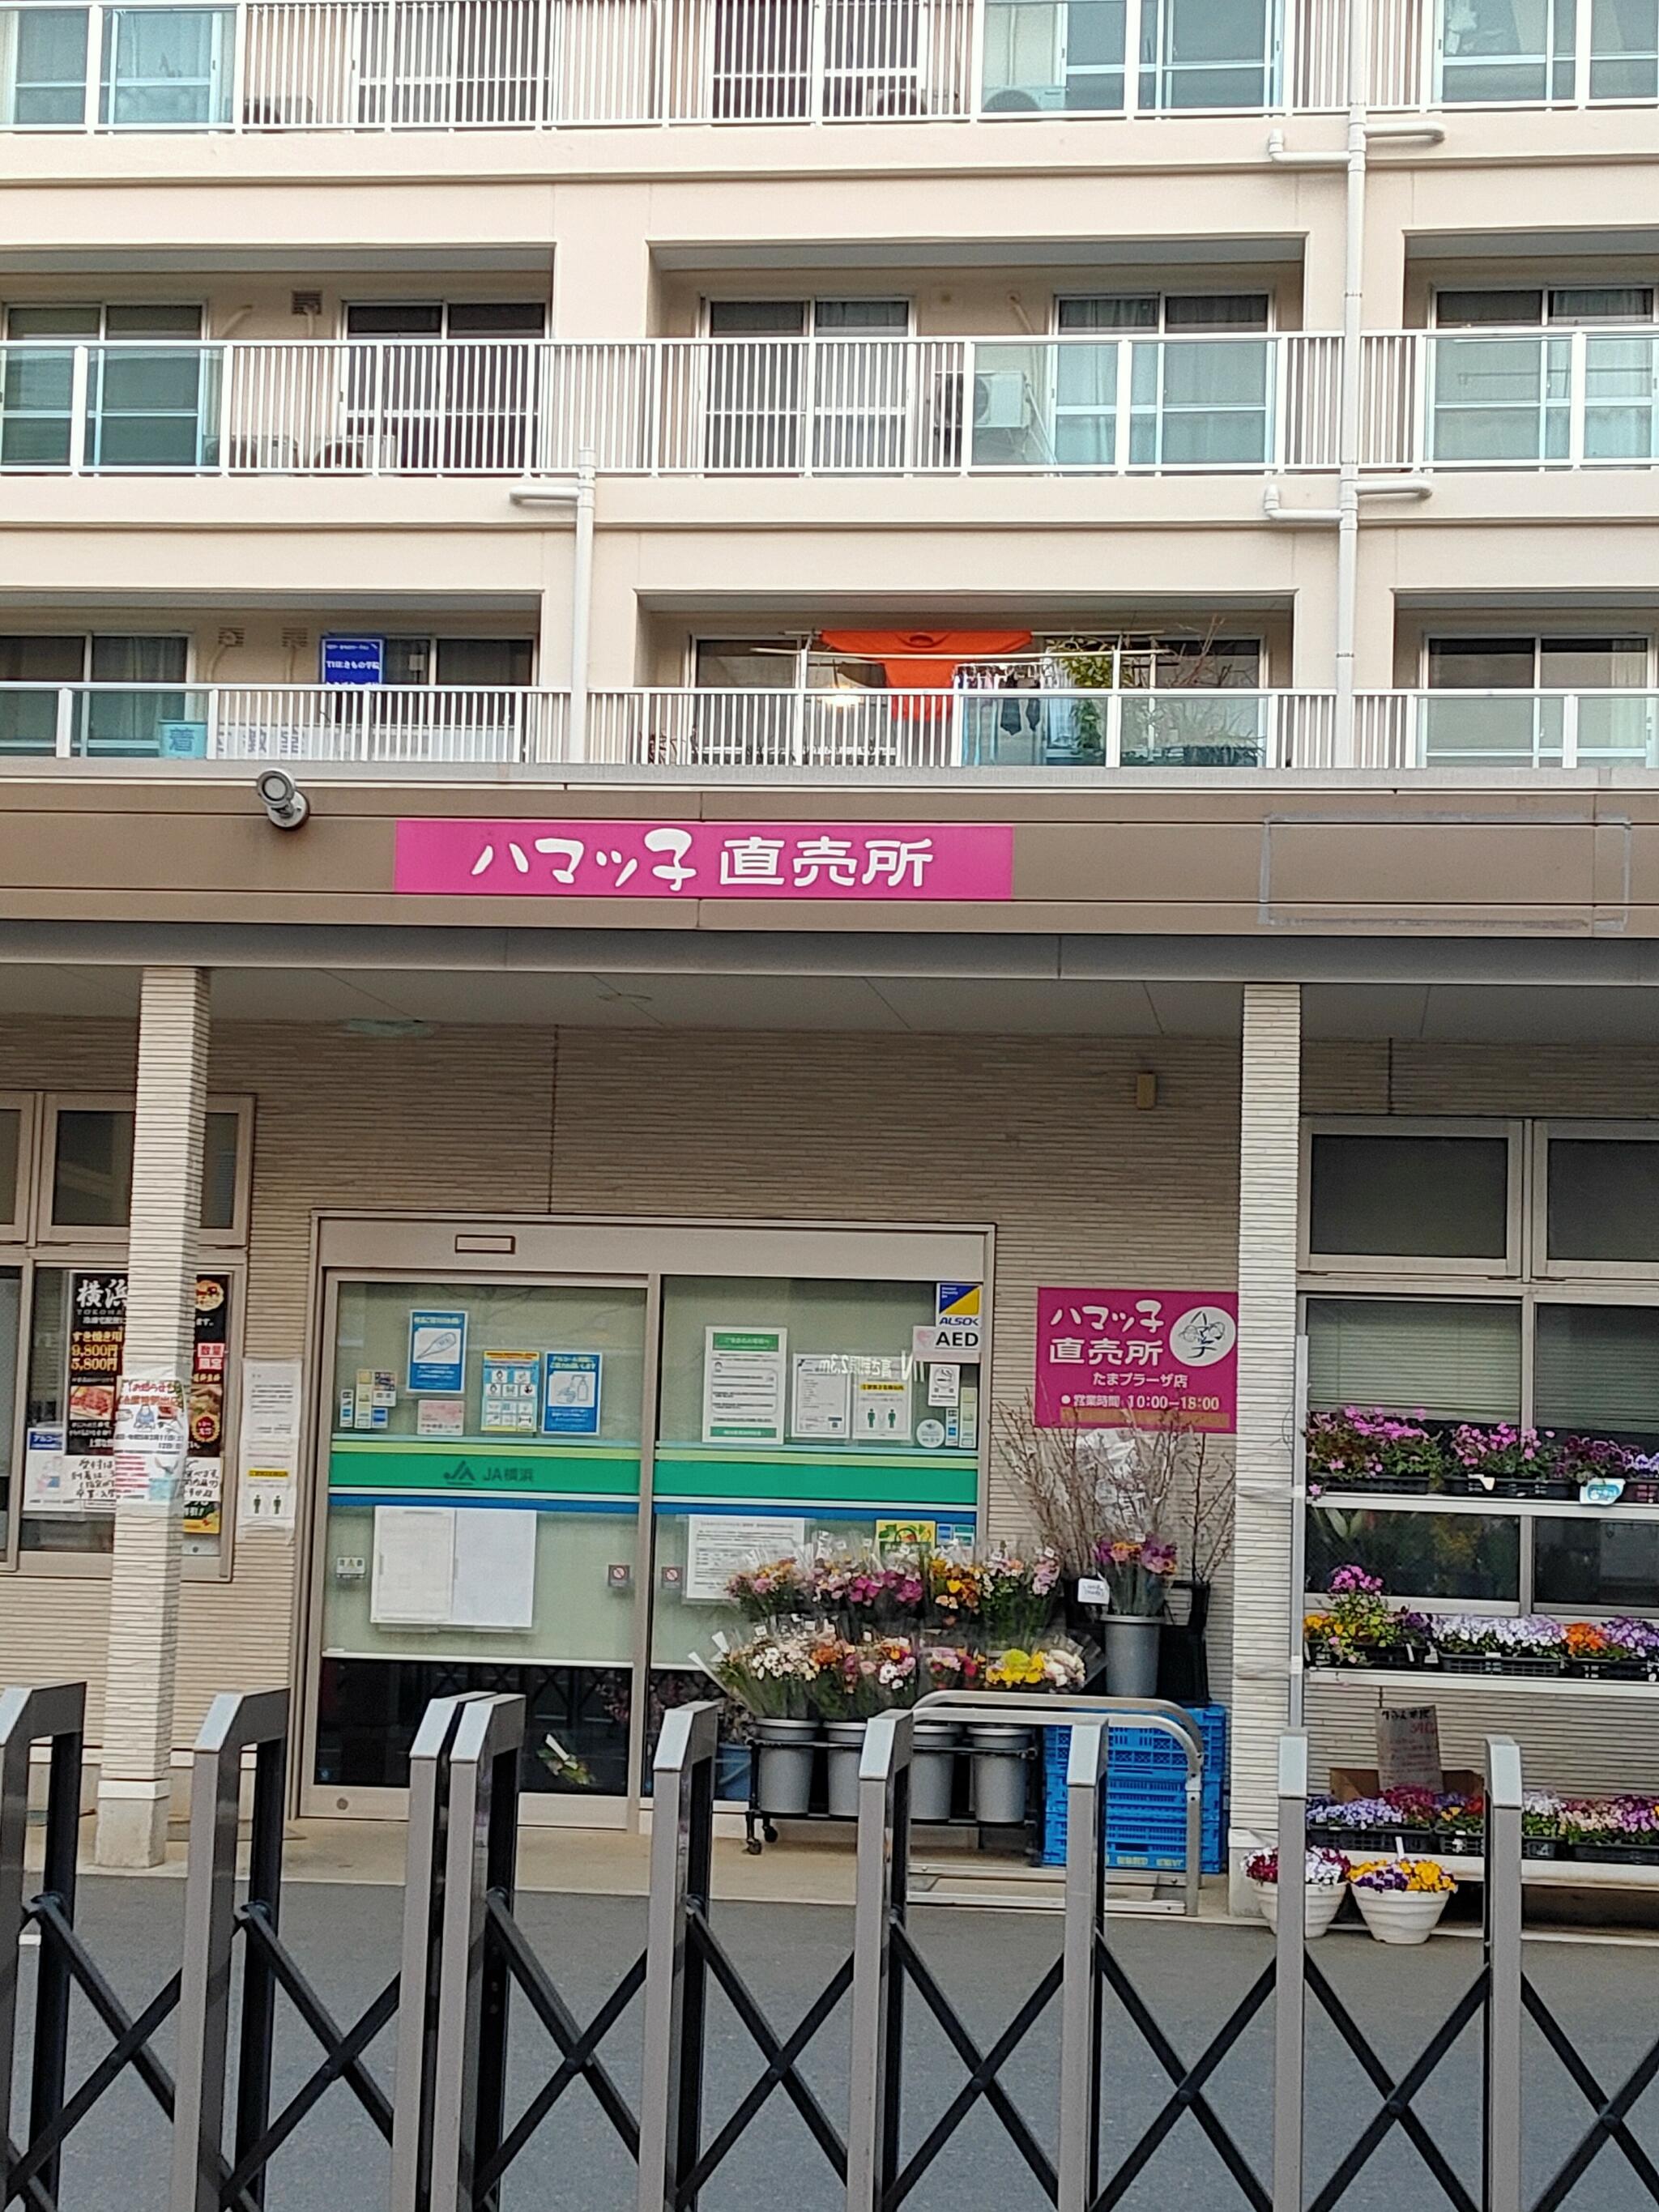 JA直売所 「ハマッ子」直売所 たまプラーザ店の代表写真8